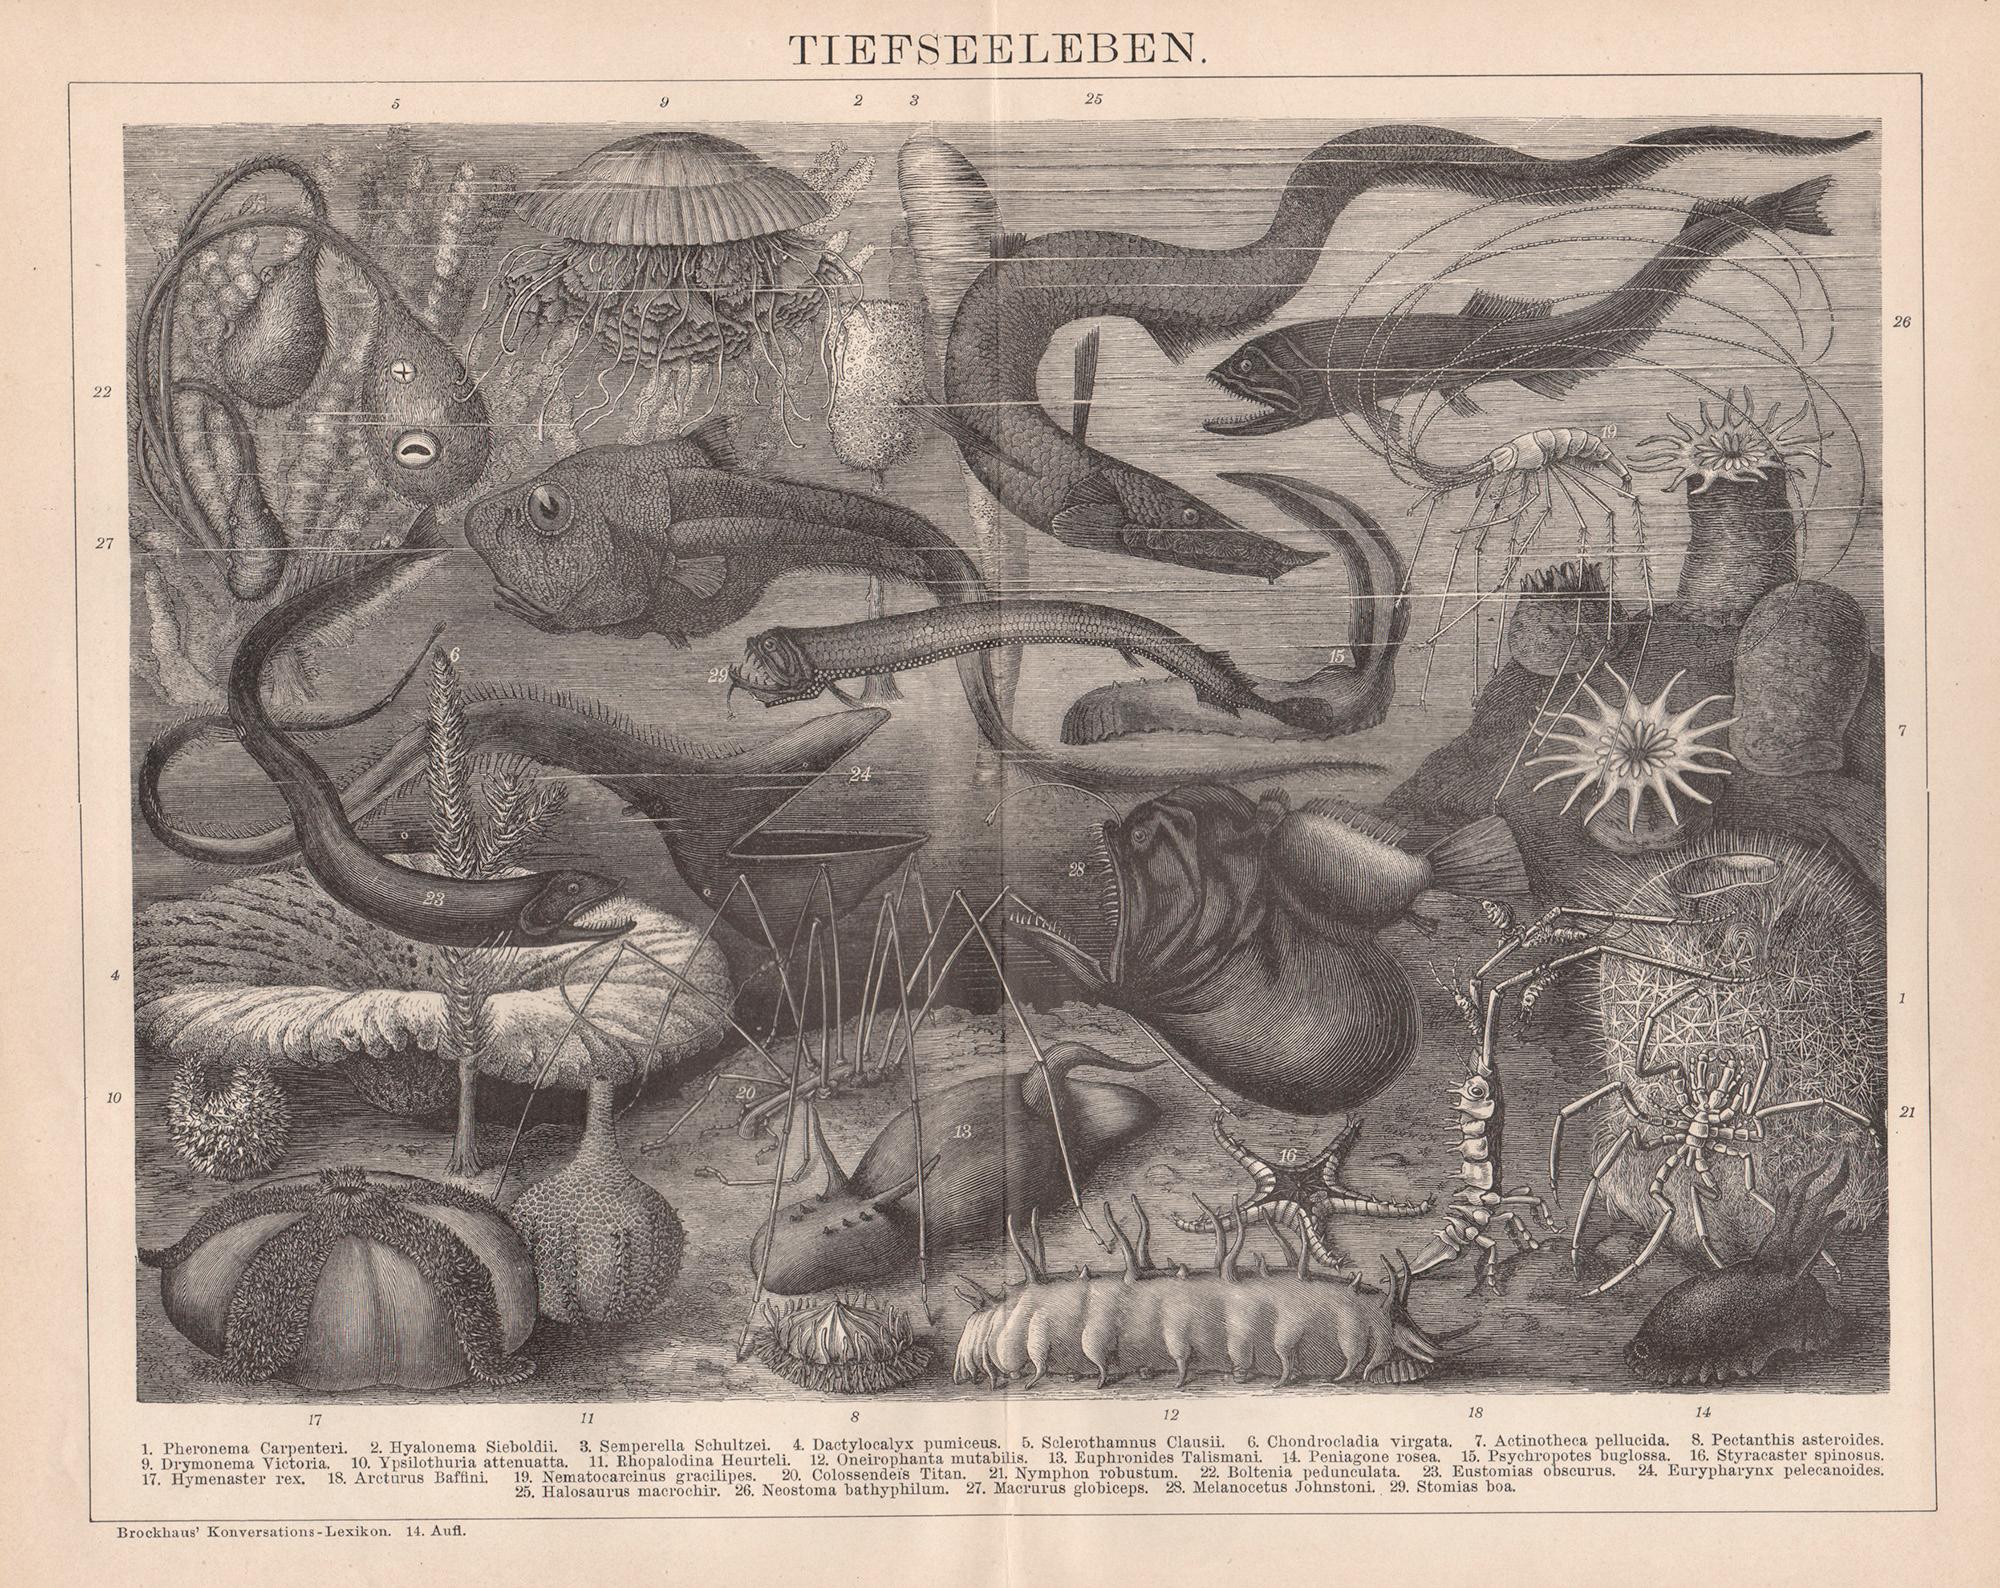 Unknown Print - Tiefseeleben (Deep Sea Life), German antique underwater sea life engraving